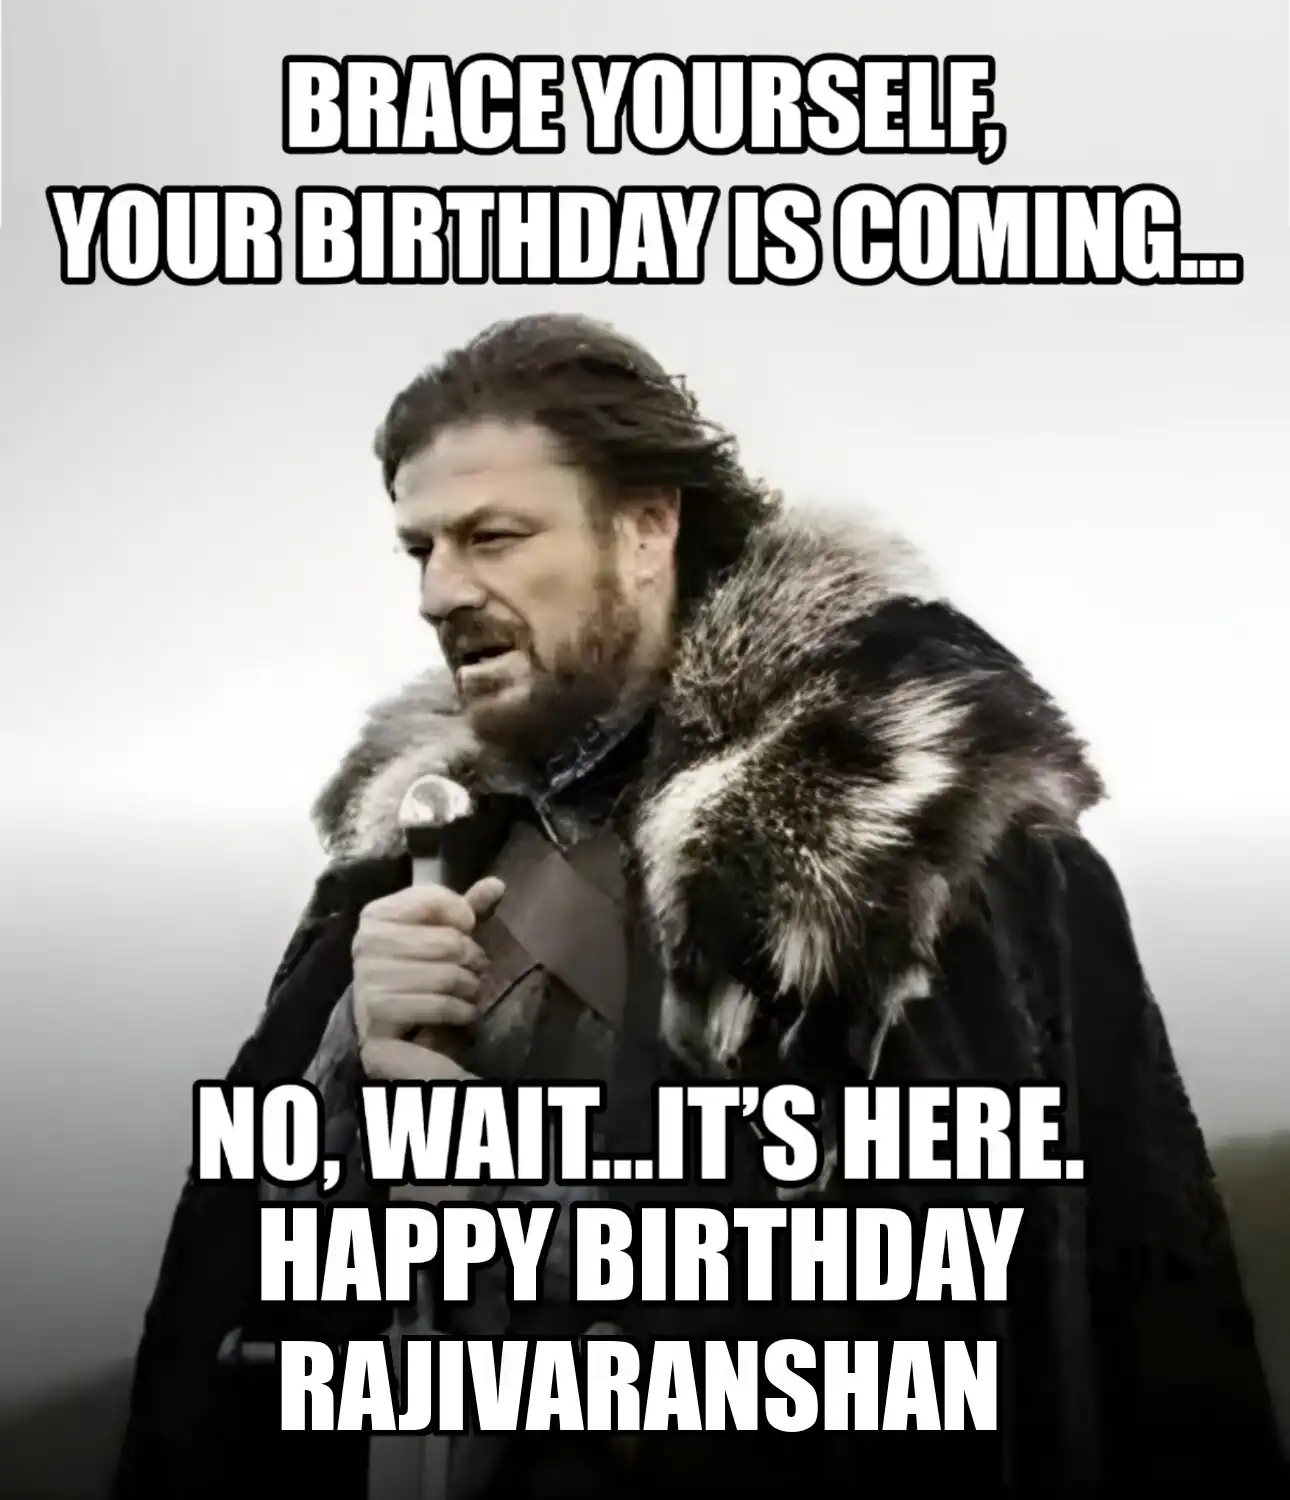 Happy Birthday Rajivaranshan Brace Yourself Your Birthday Is Coming Meme